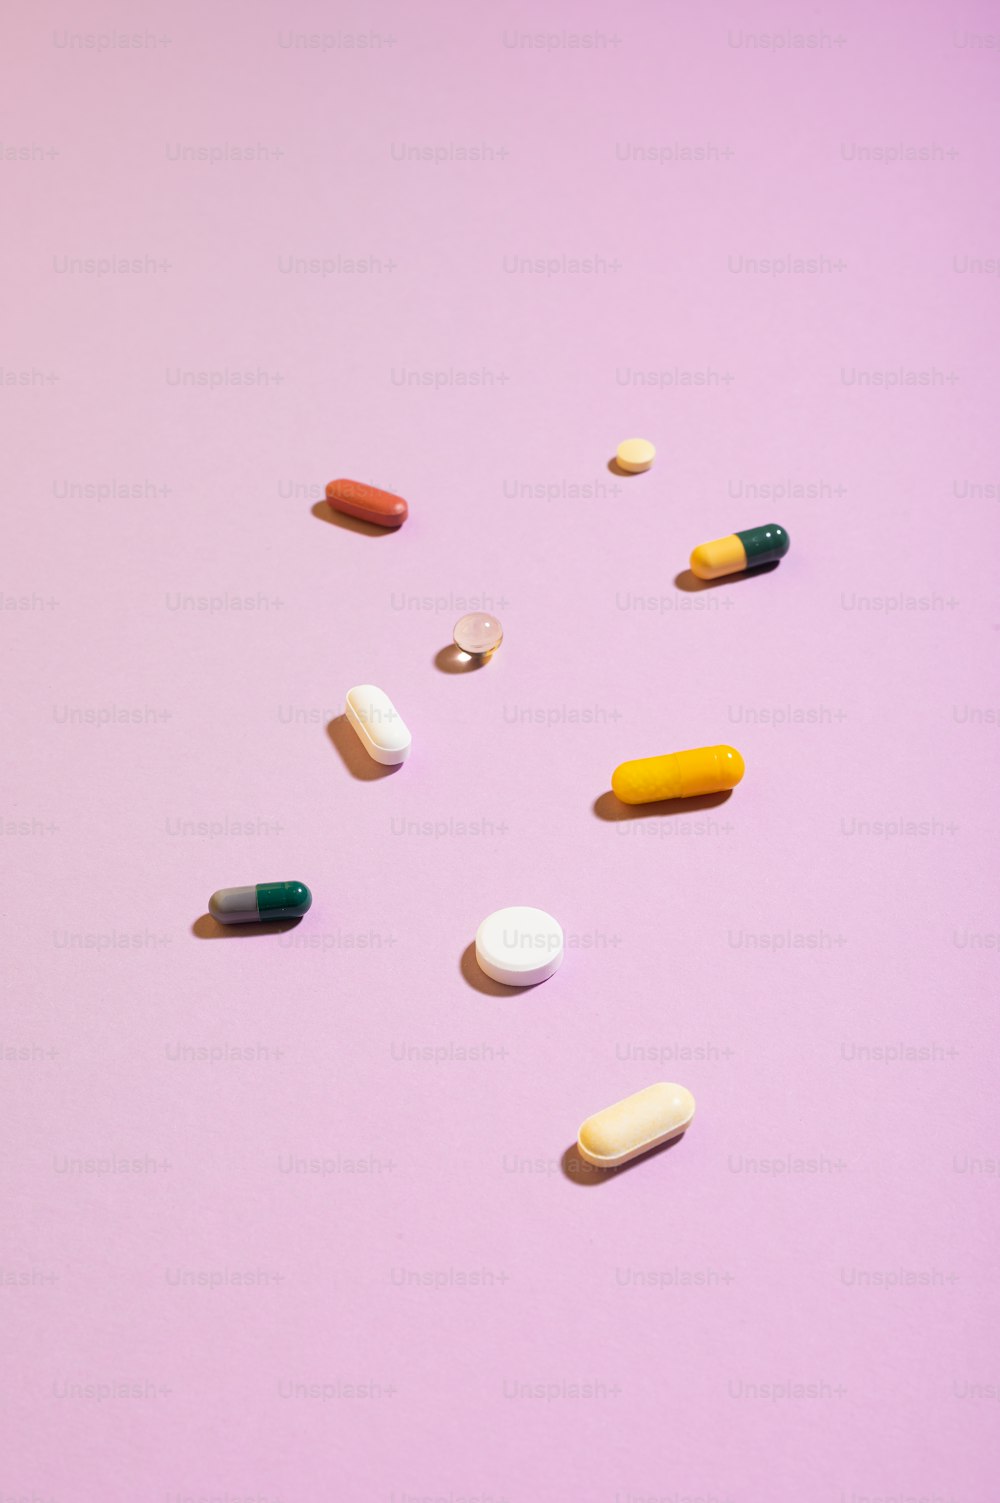 Un grupo de píldoras sentadas sobre una superficie rosada